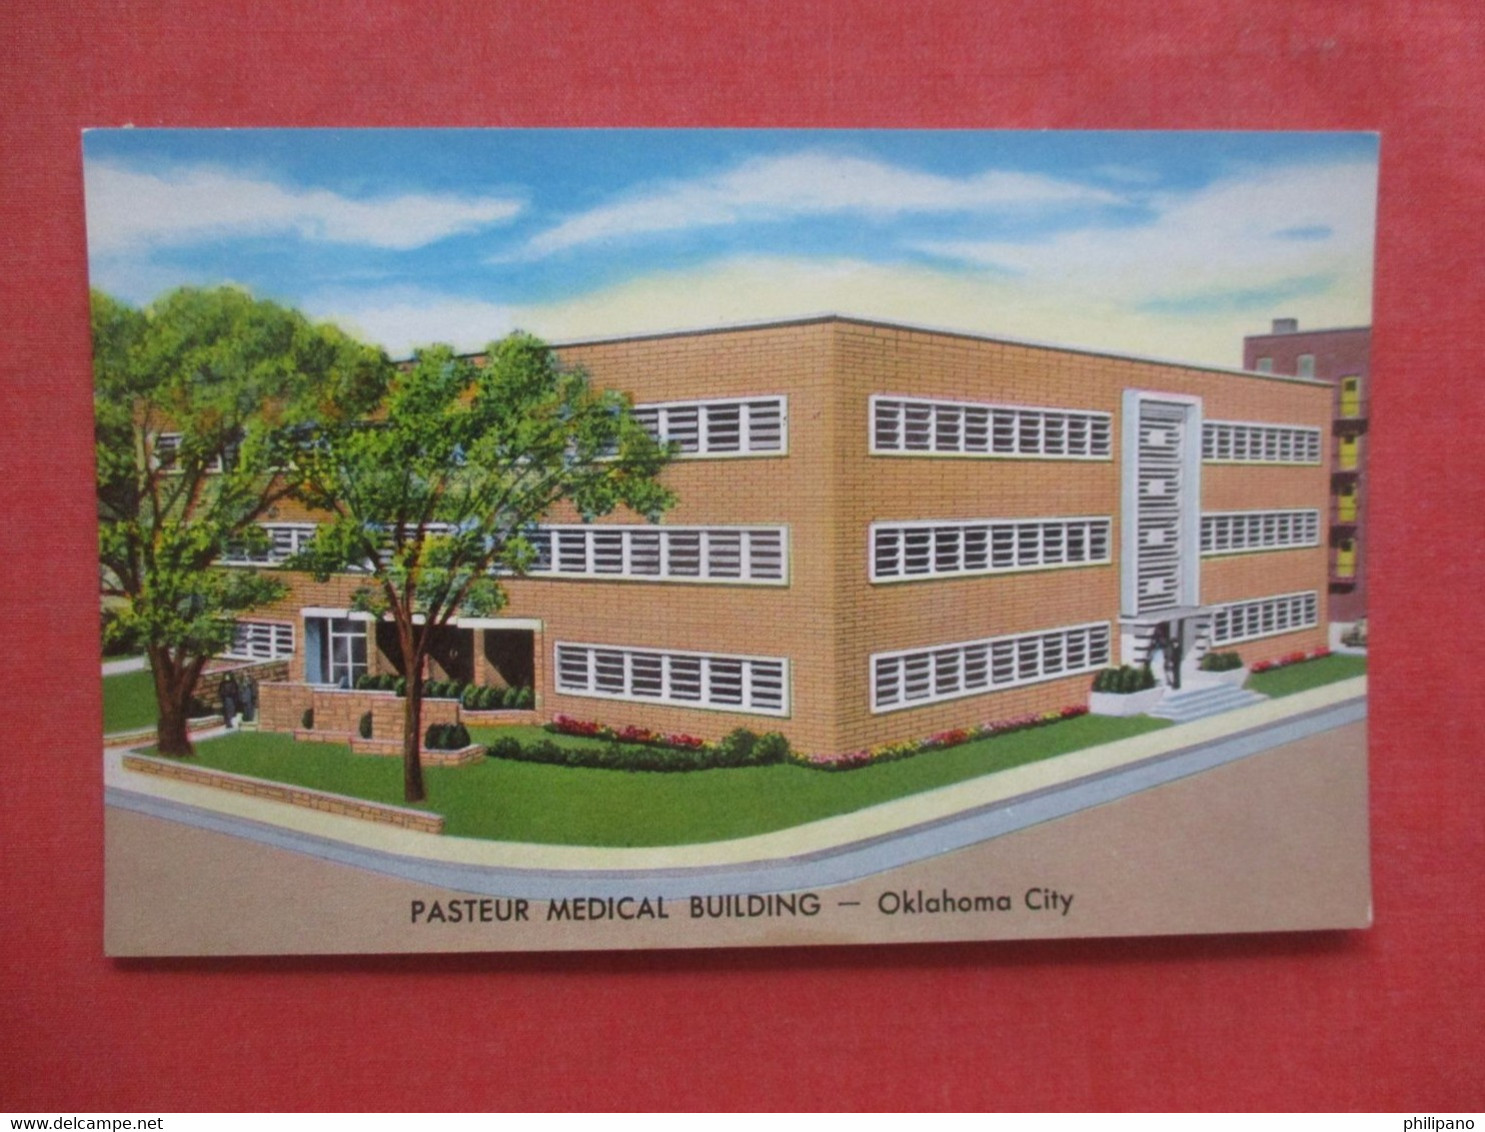 Pasteur Medical Building  - Oklahoma > Oklahoma City   Ref  4509 - Oklahoma City